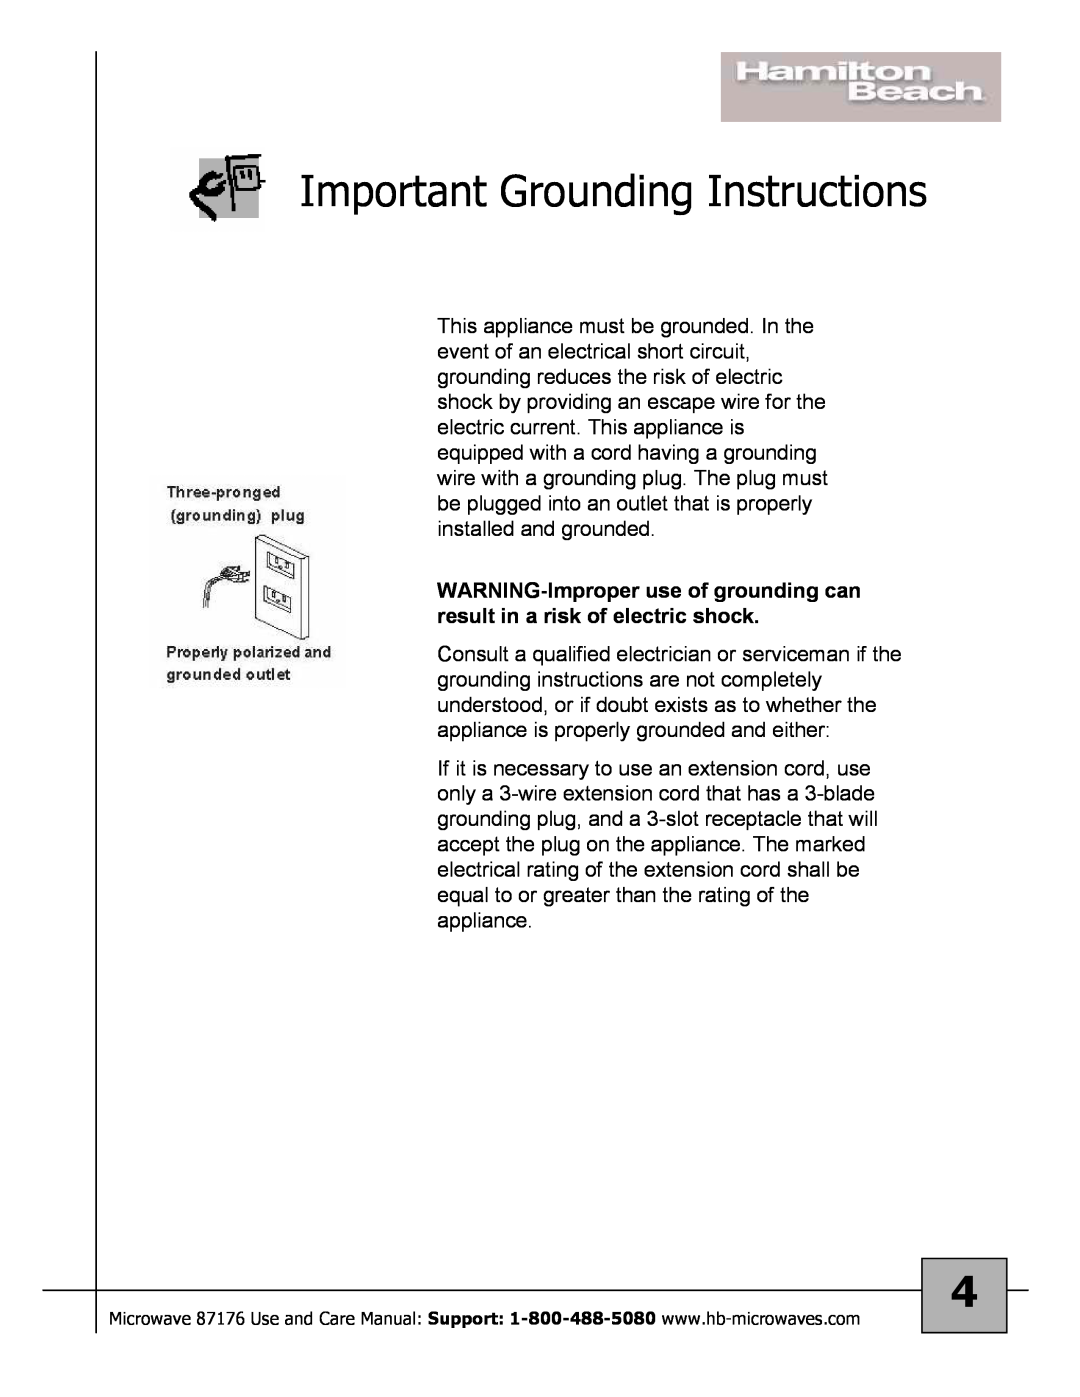 Hamilton Beach 87176 owner manual Important Grounding Instructions 